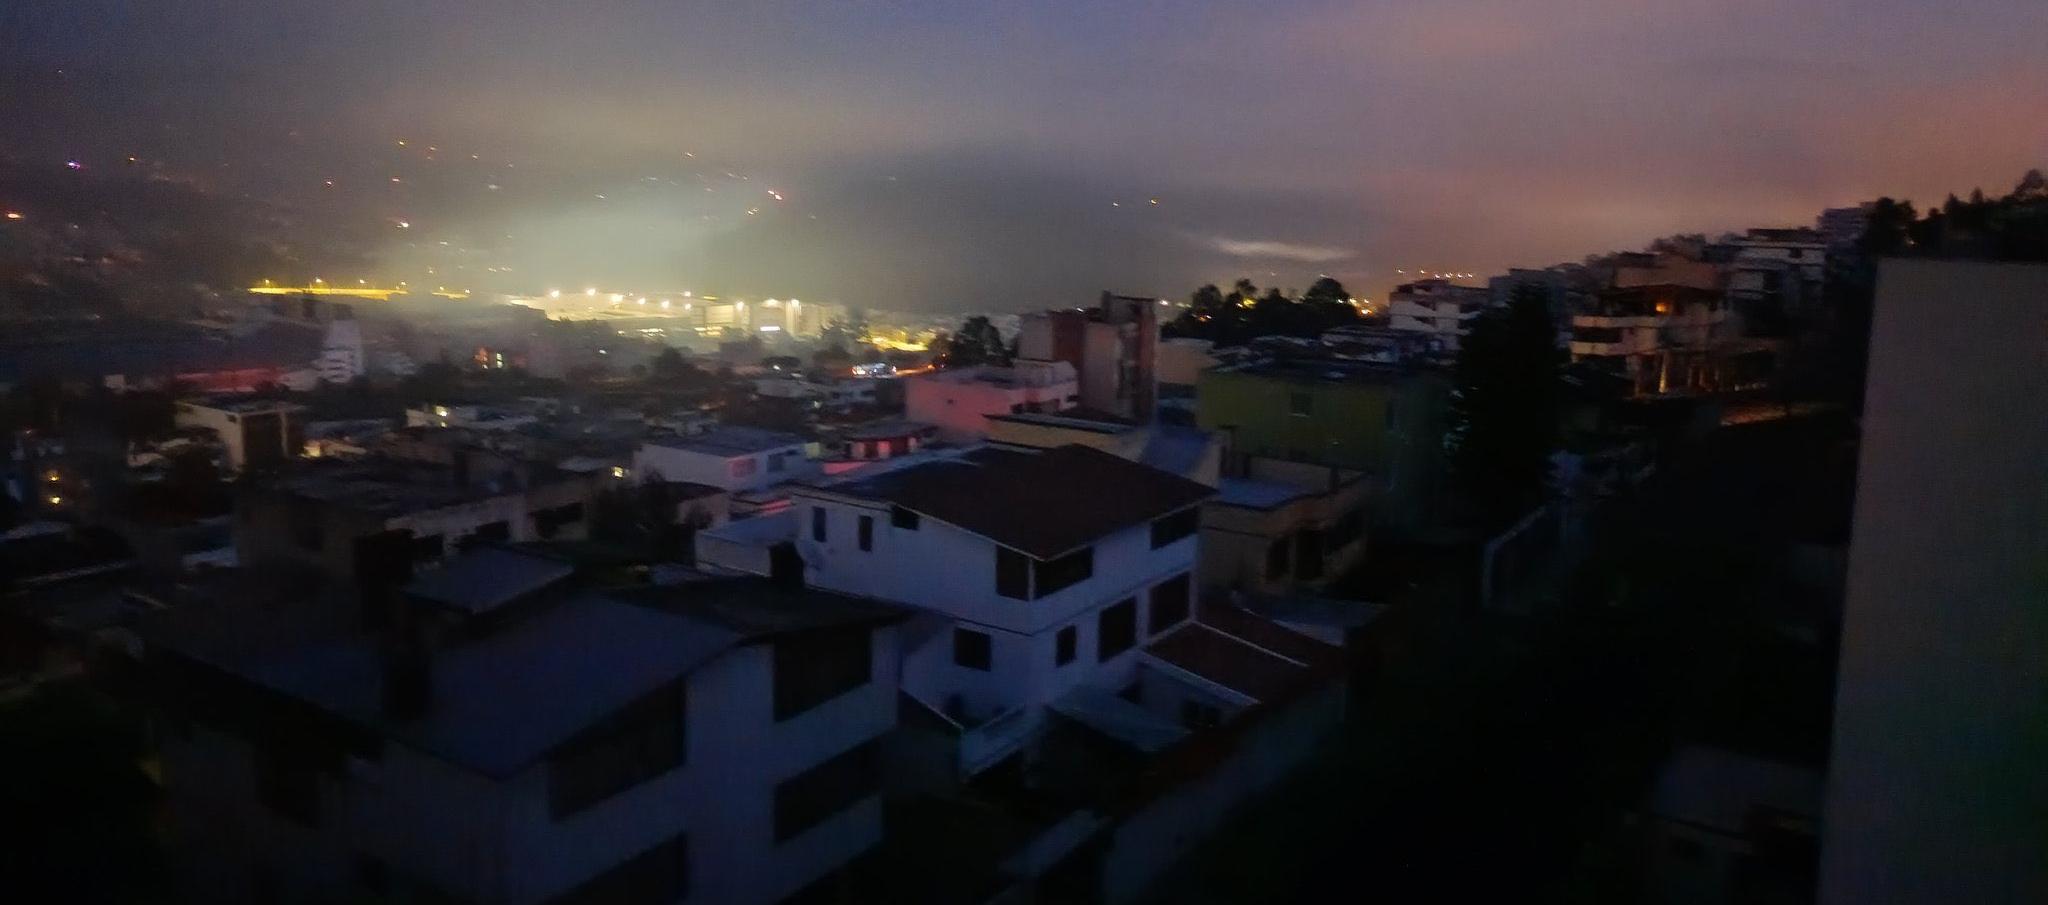 Apagones prolongados por más de cinco horas afectan a Ecuador